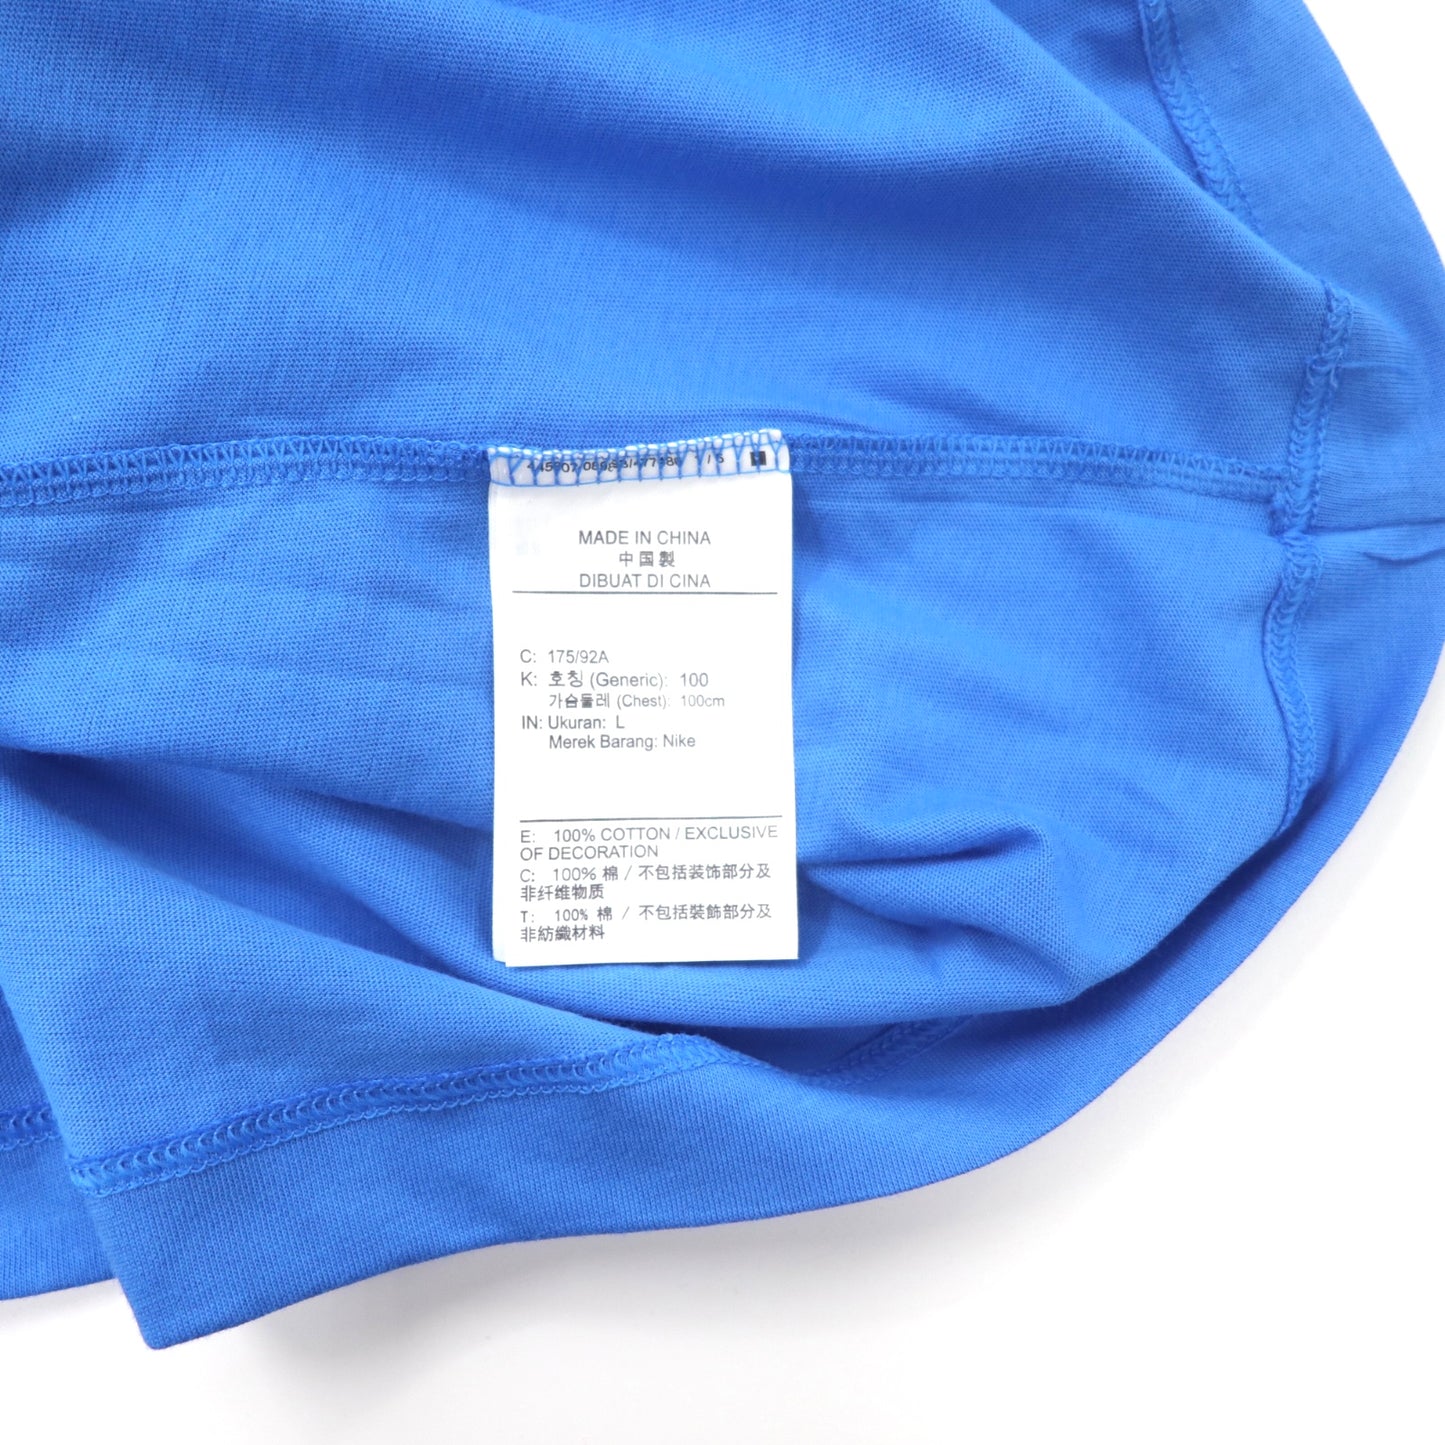 NIKE シューボックスS/S Tシャツ L ブルー DD1261-435 2021年モデル 未使用品